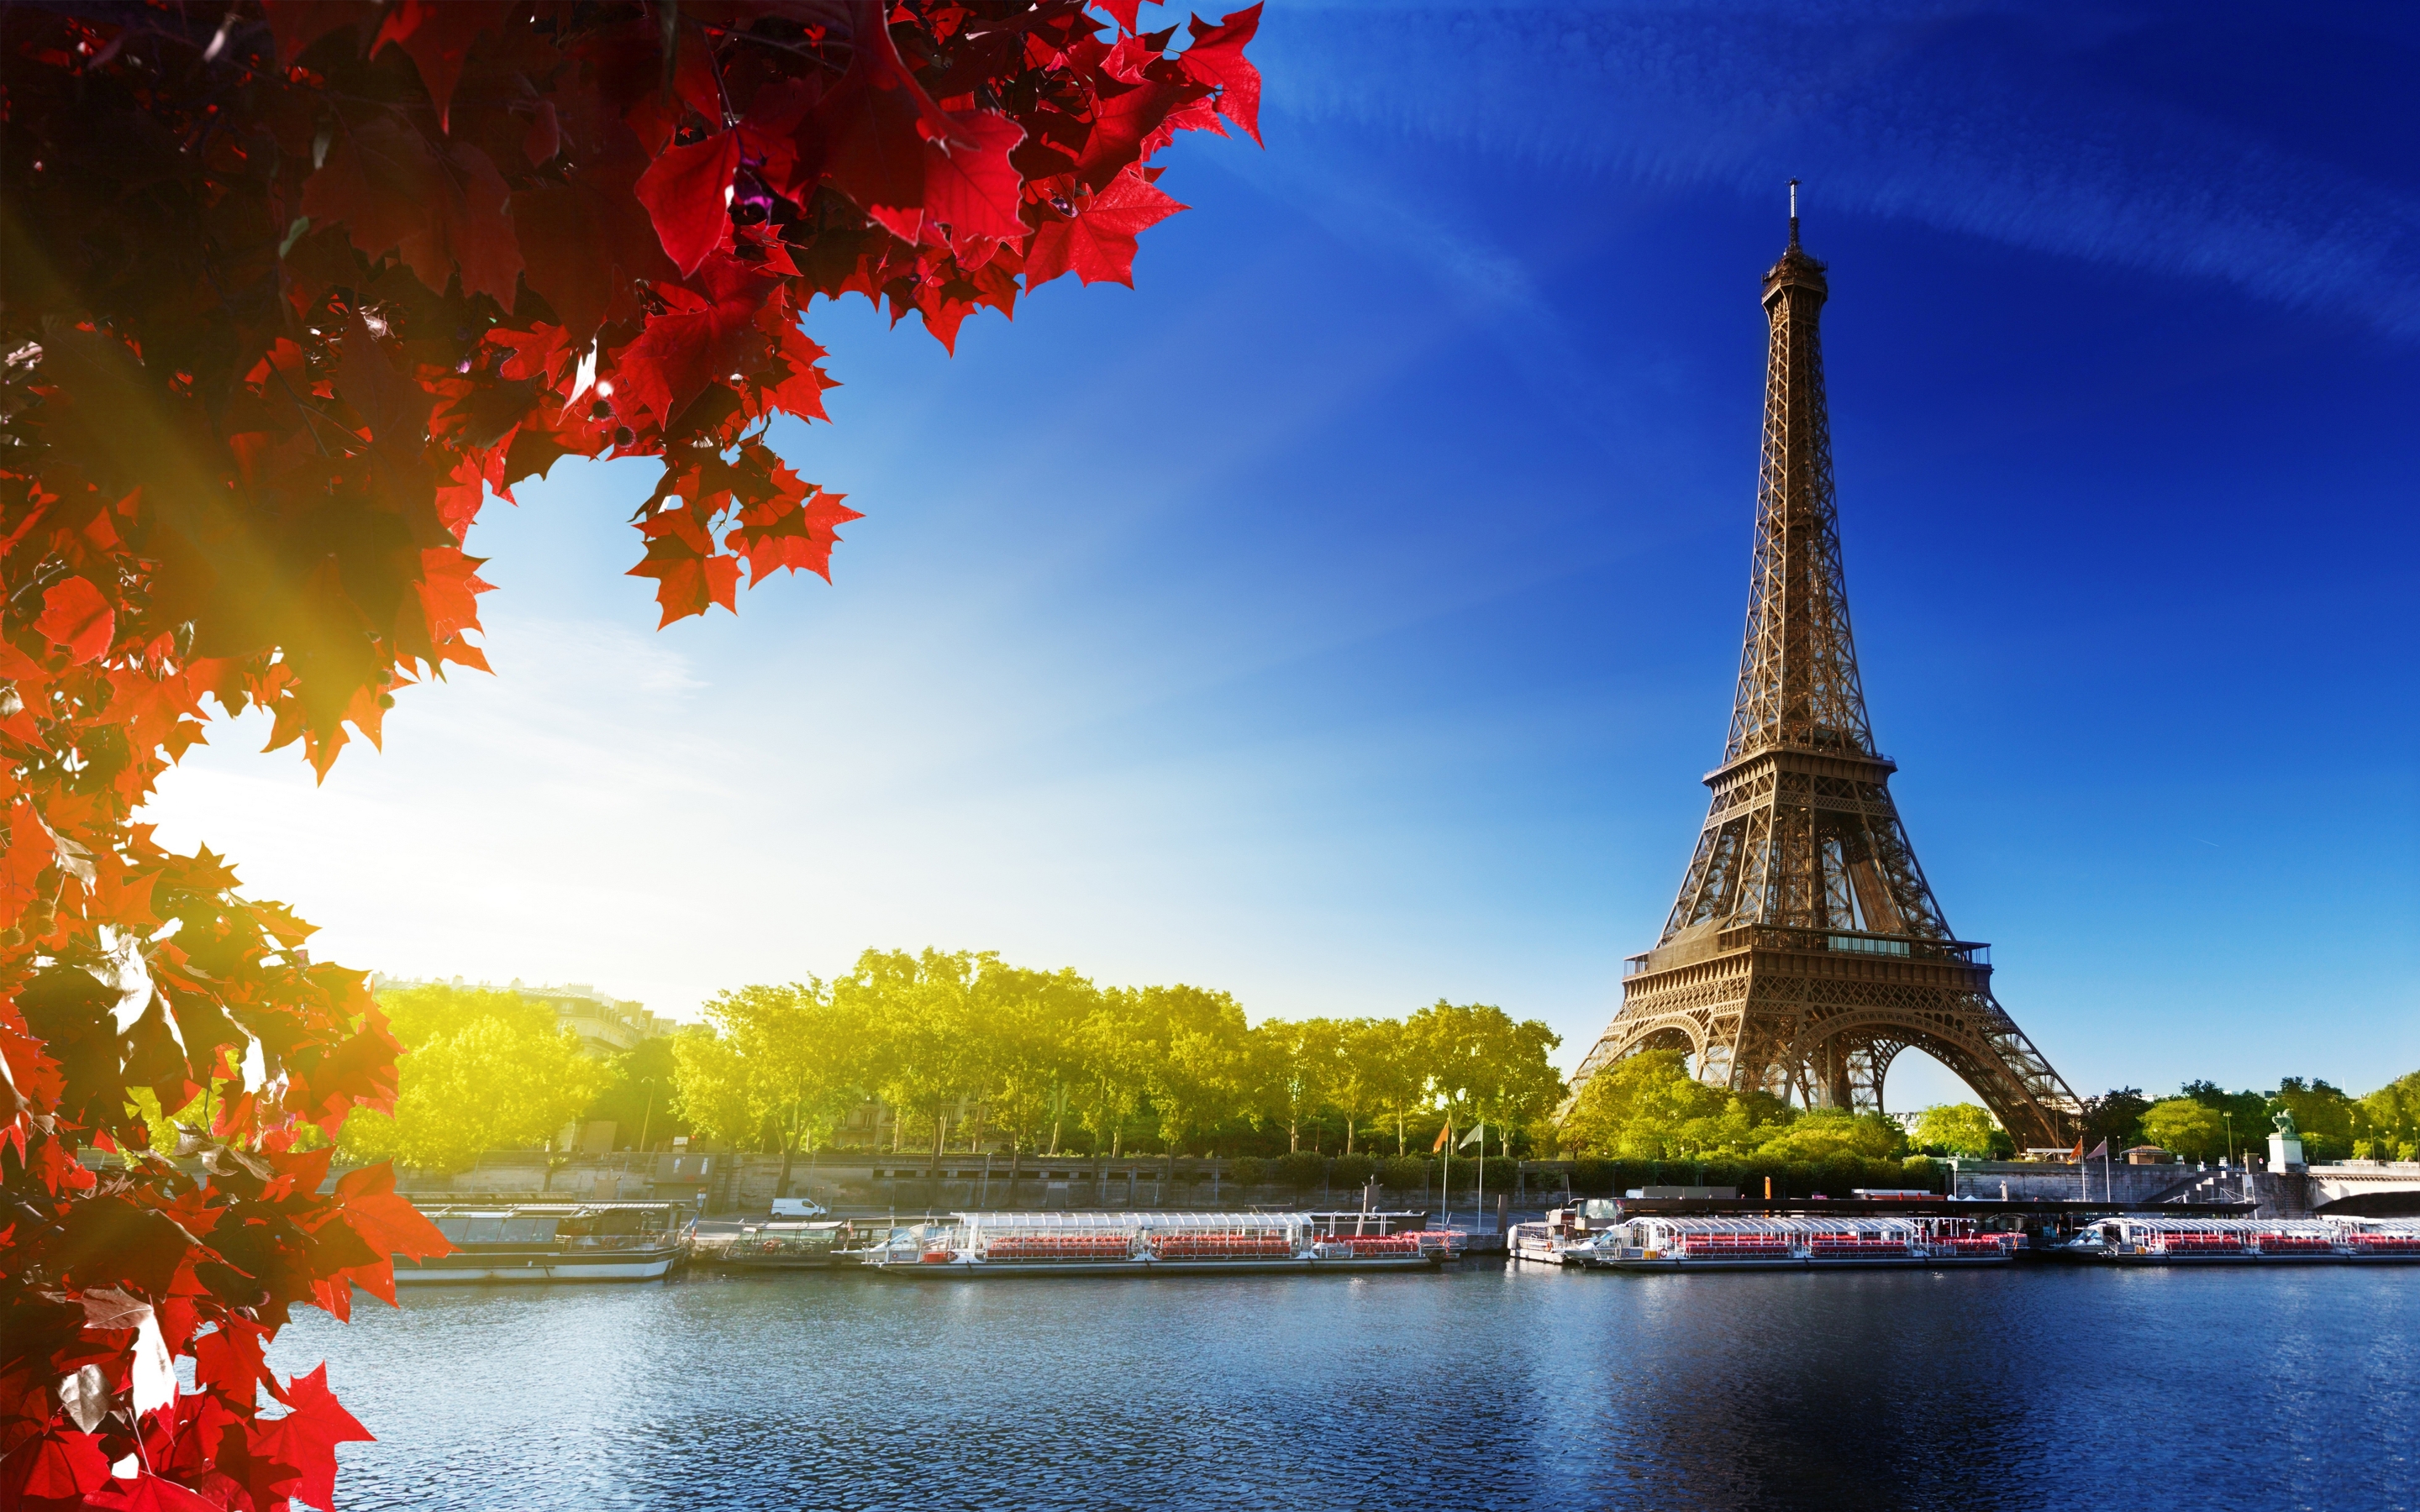 Eiffel Tower Paris for 2880 x 1800 Retina Display resolution